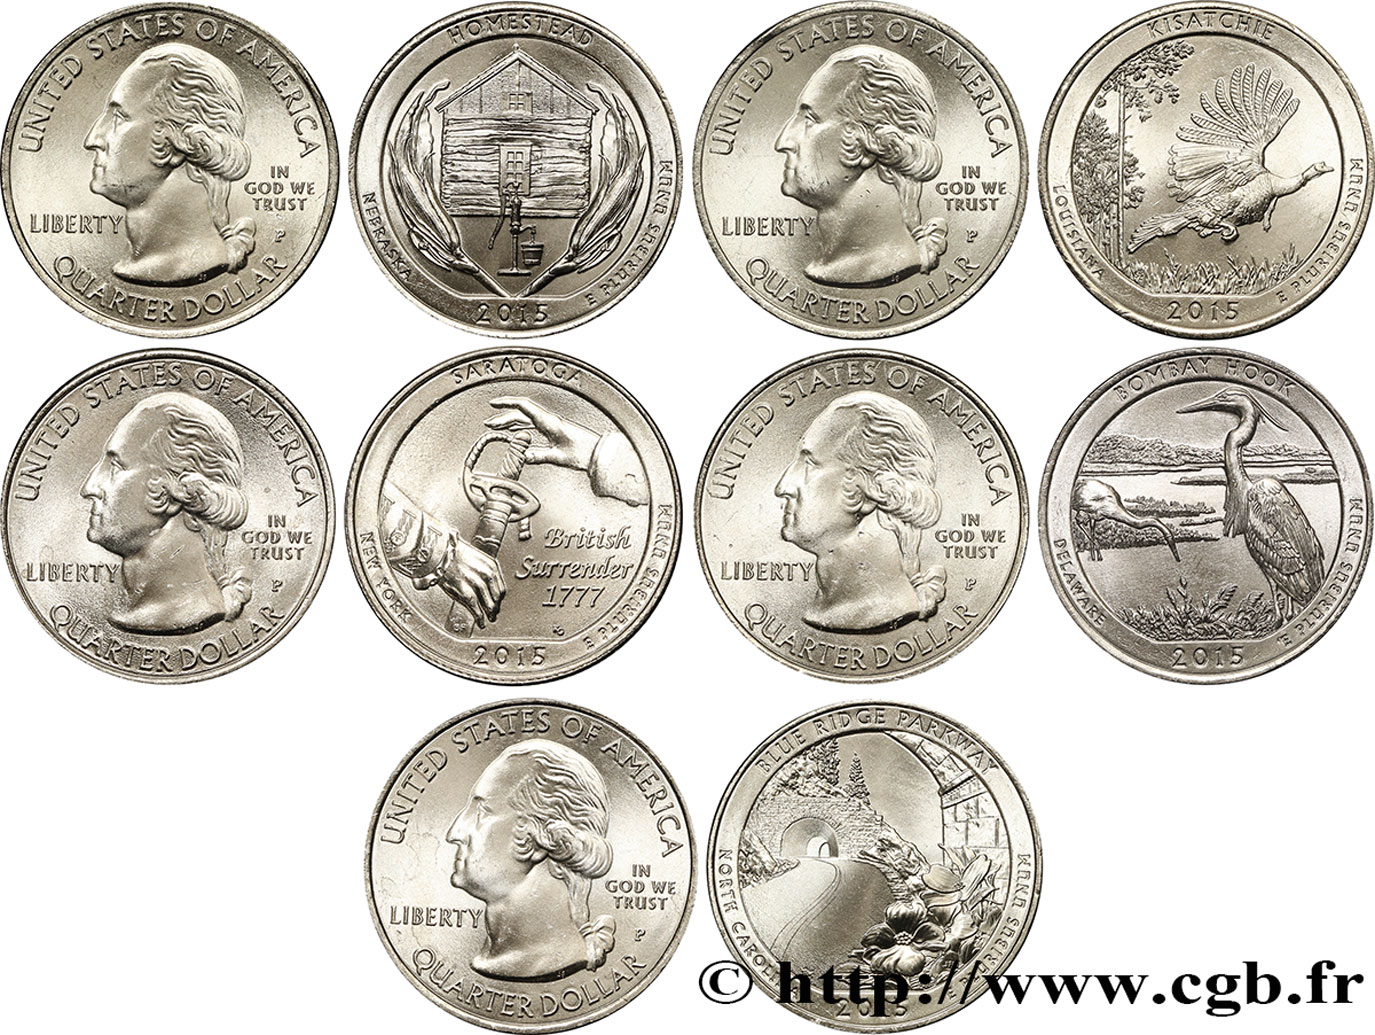 VEREINIGTE STAATEN VON AMERIKA Série complète des 5 monnaies de 1/4 de Dollar 2015 2015 Philadelphie - P fST 